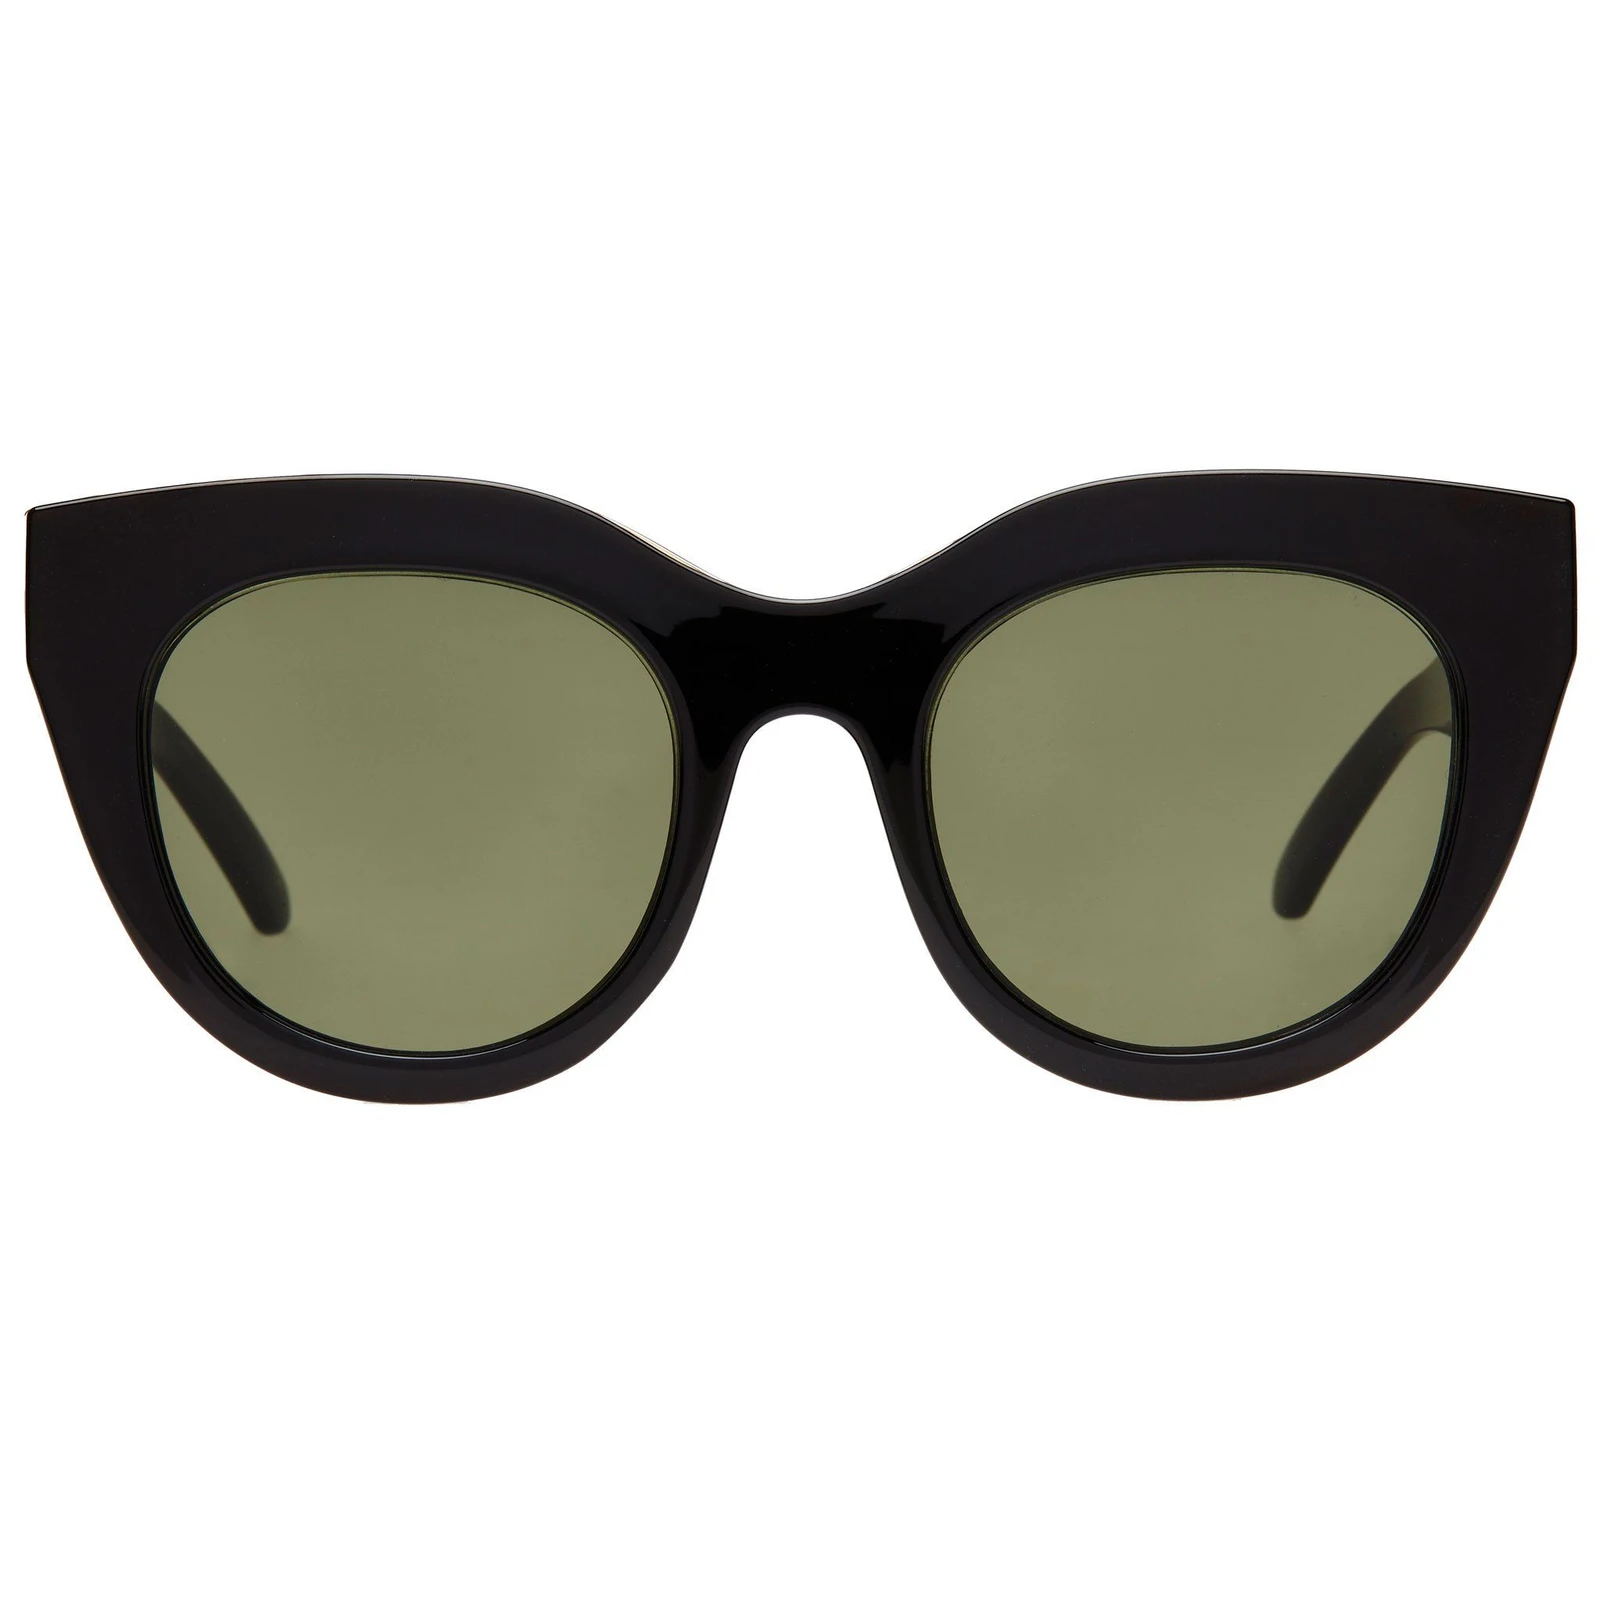 Le Specs Sunglasses - Air Heart - Black/Gold